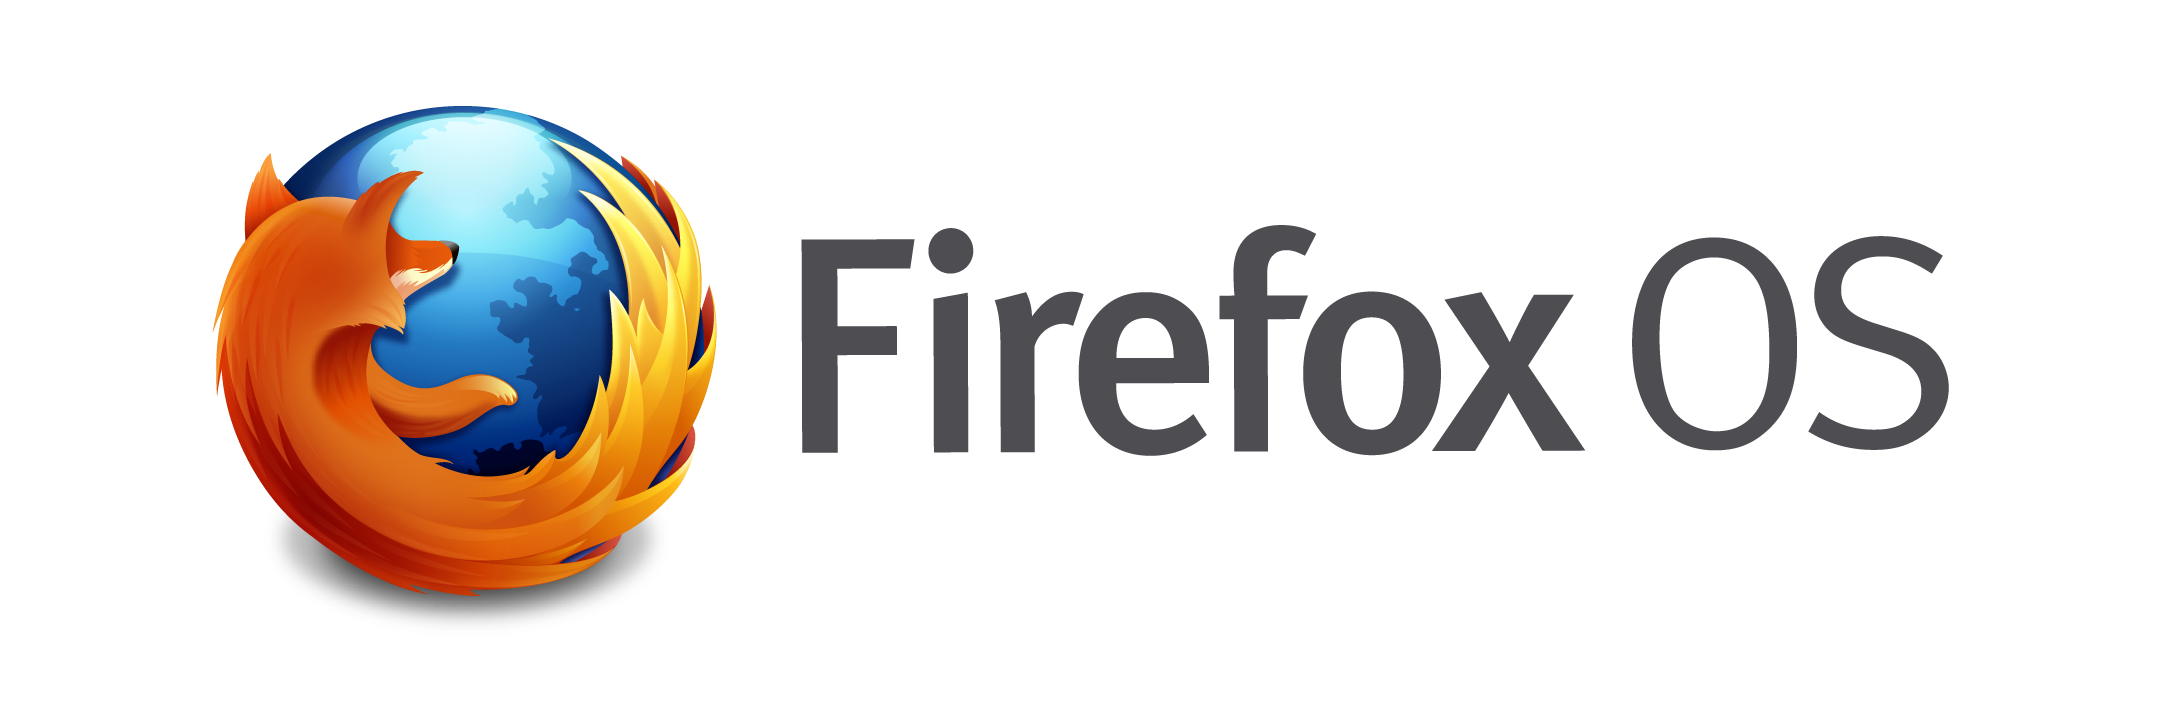 Firefox Os Logo - KibrisPDR